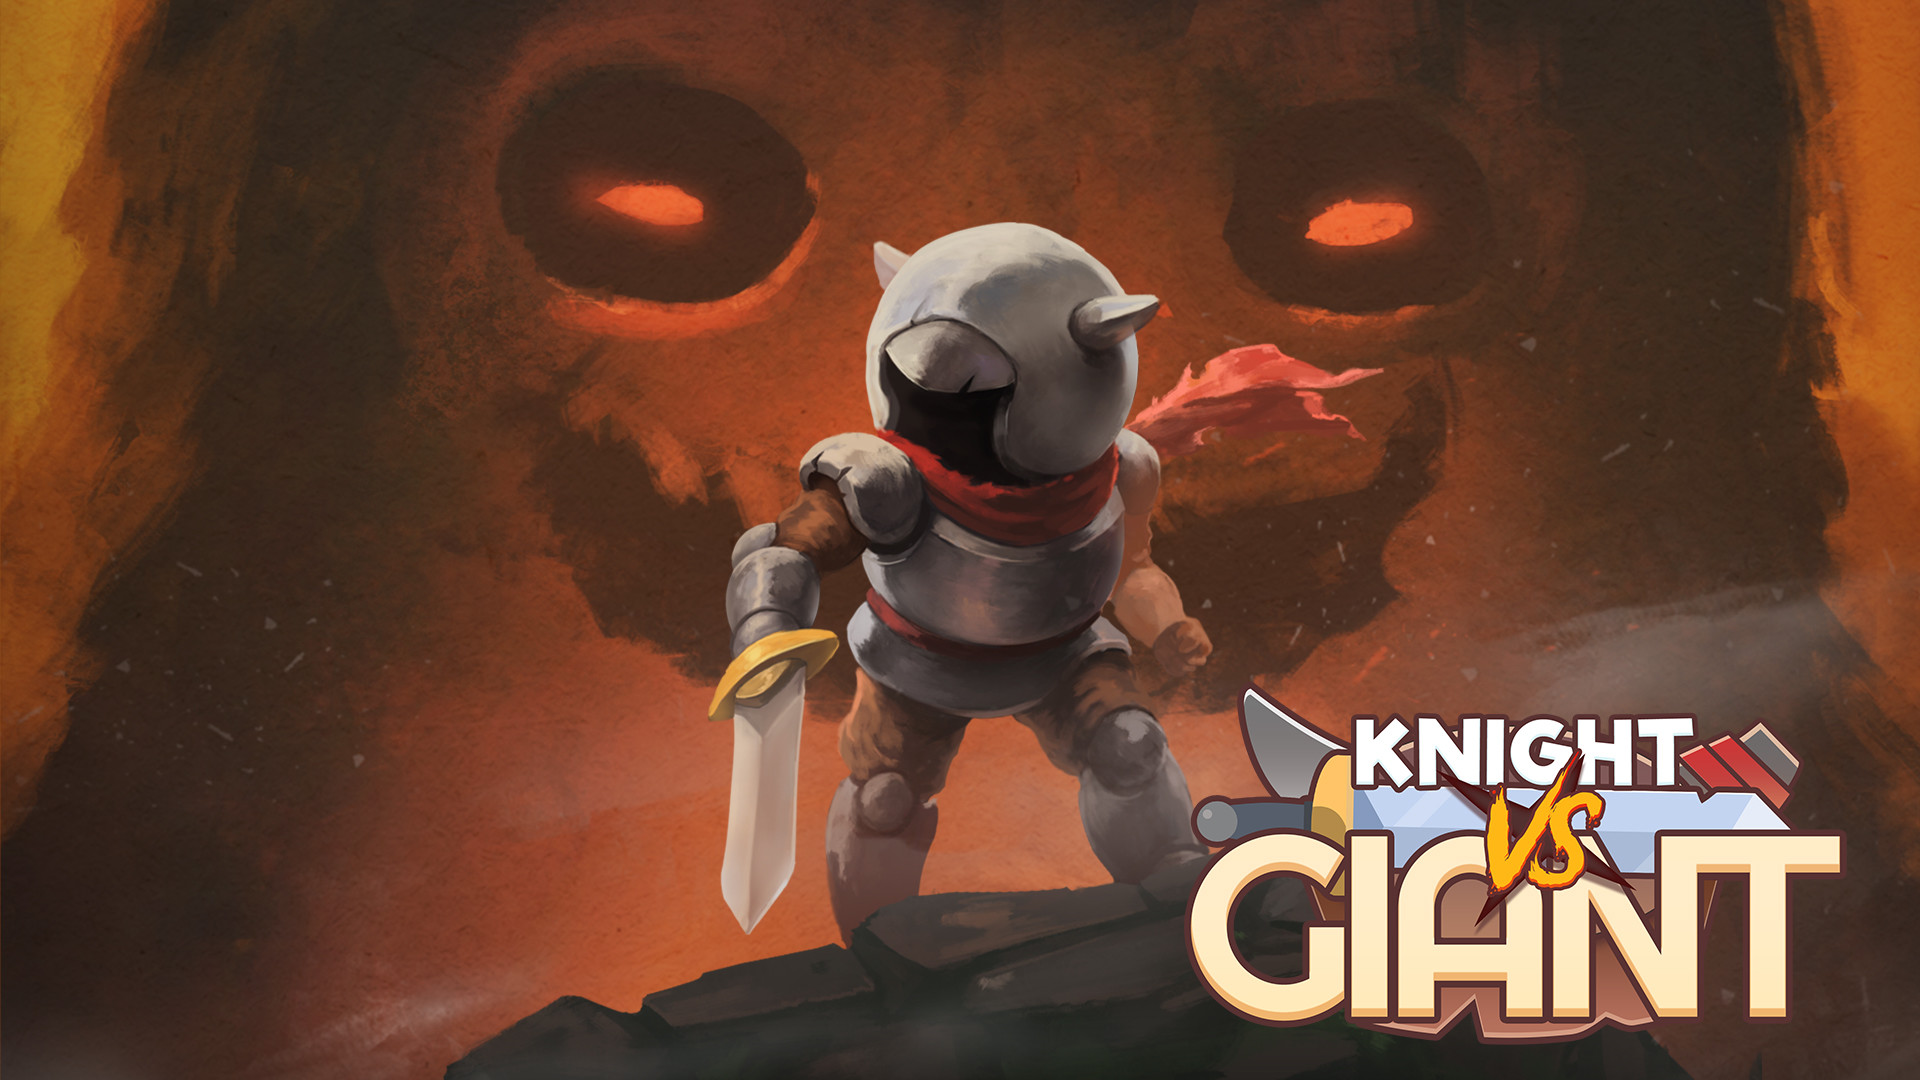 Knight Vs Giant screenshot